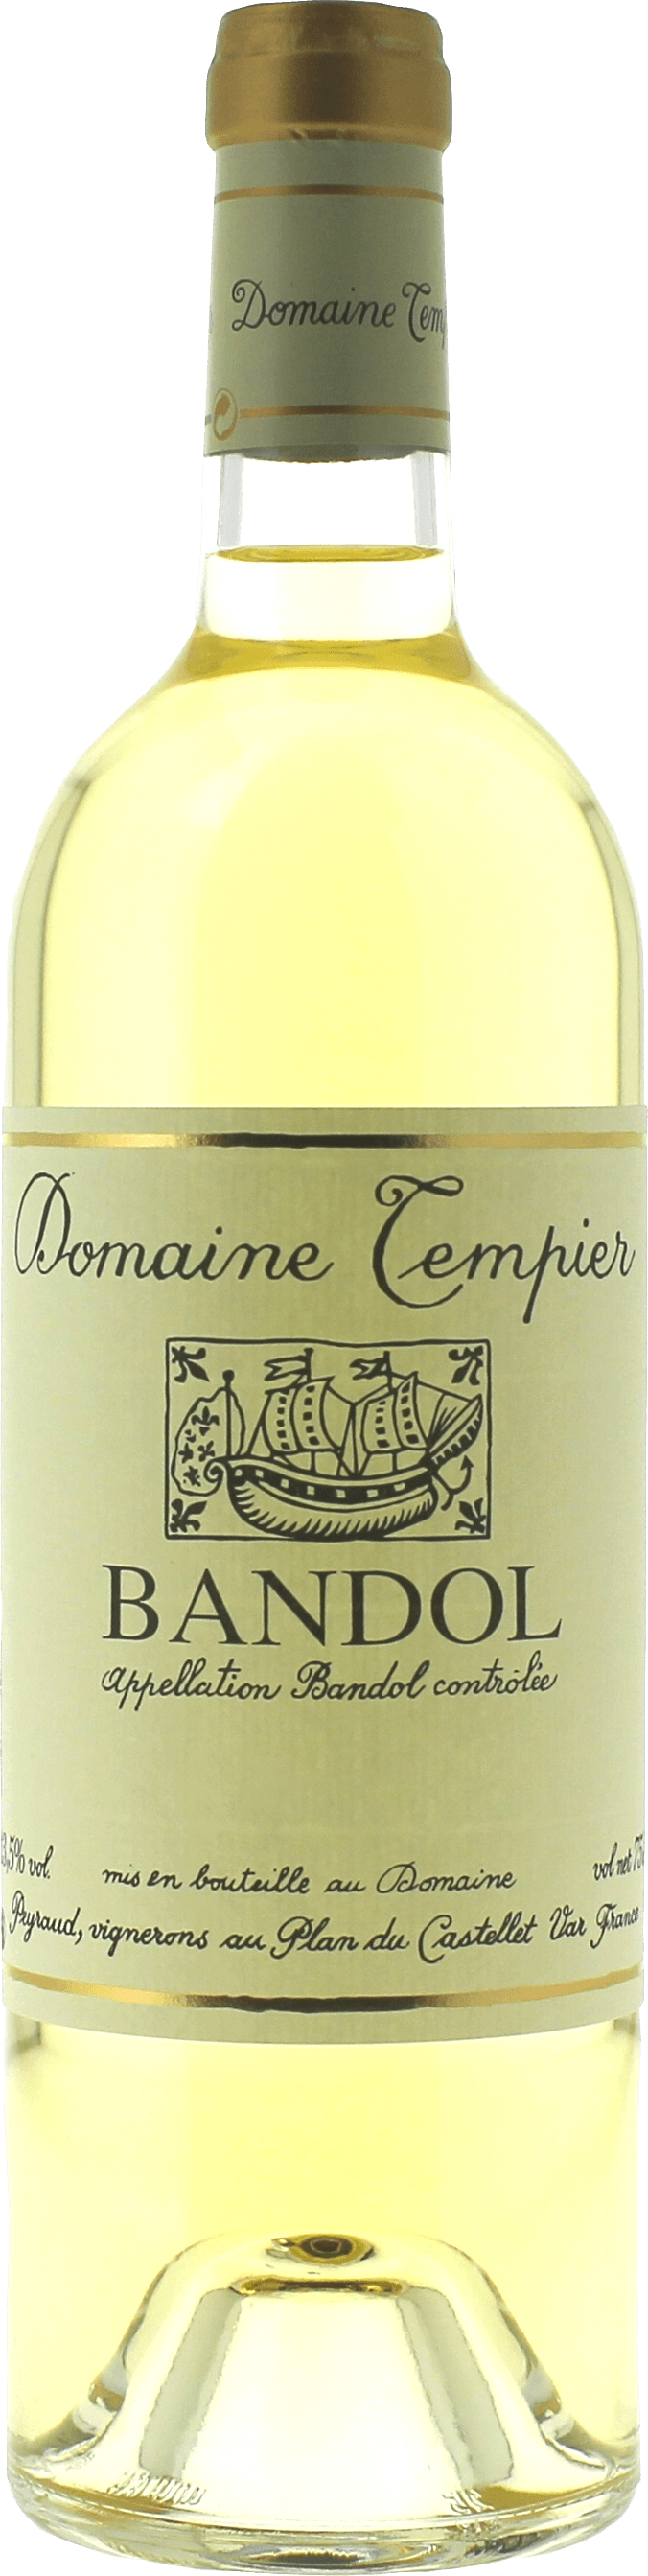 Bandol domaine tempier blanc 2016  Bandol, Slection provence blanc